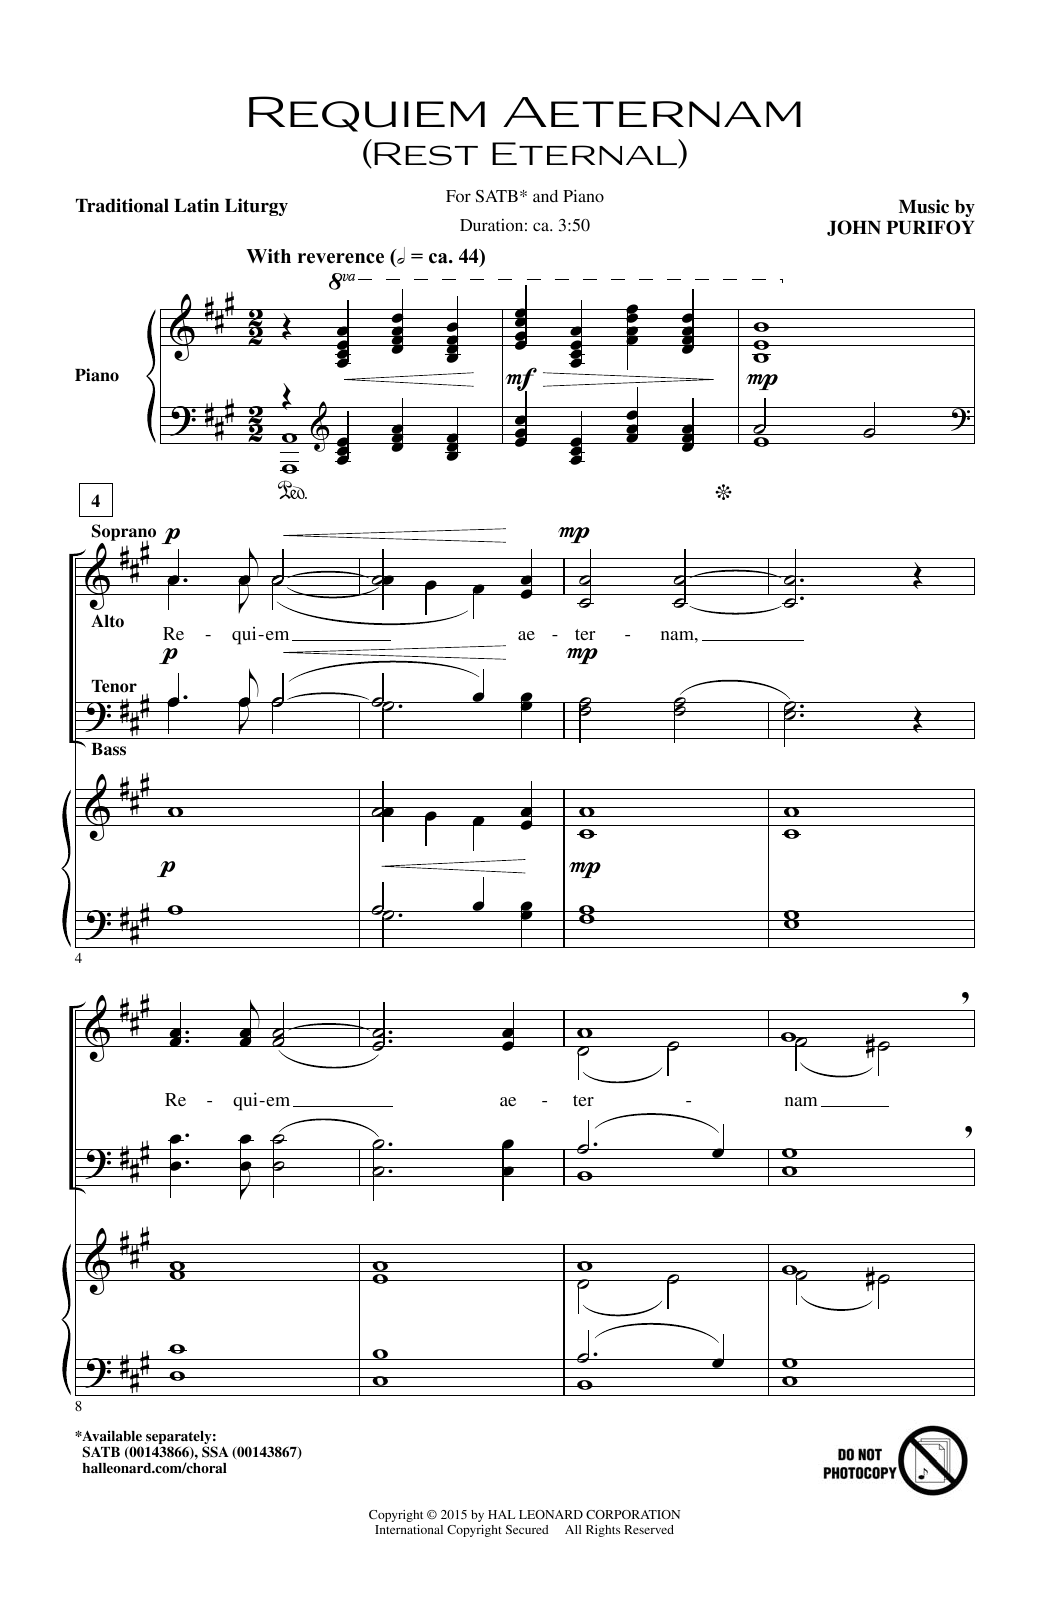 John Purifoy Requiem Aeternam (Rest Eternal) Sheet Music Notes & Chords for SSA - Download or Print PDF